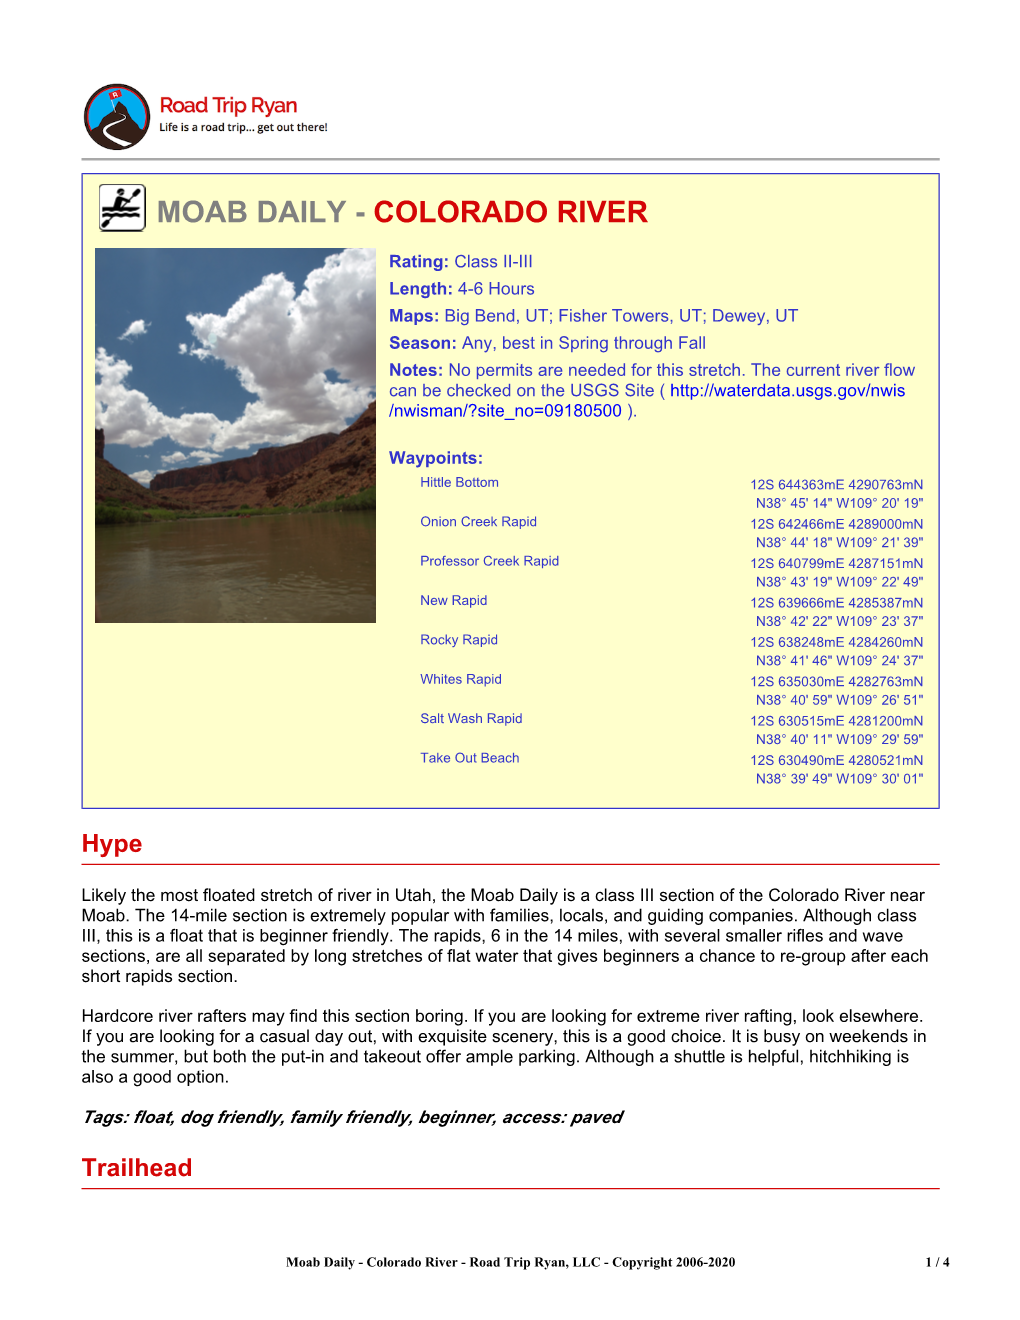 Moab Daily - Colorado River